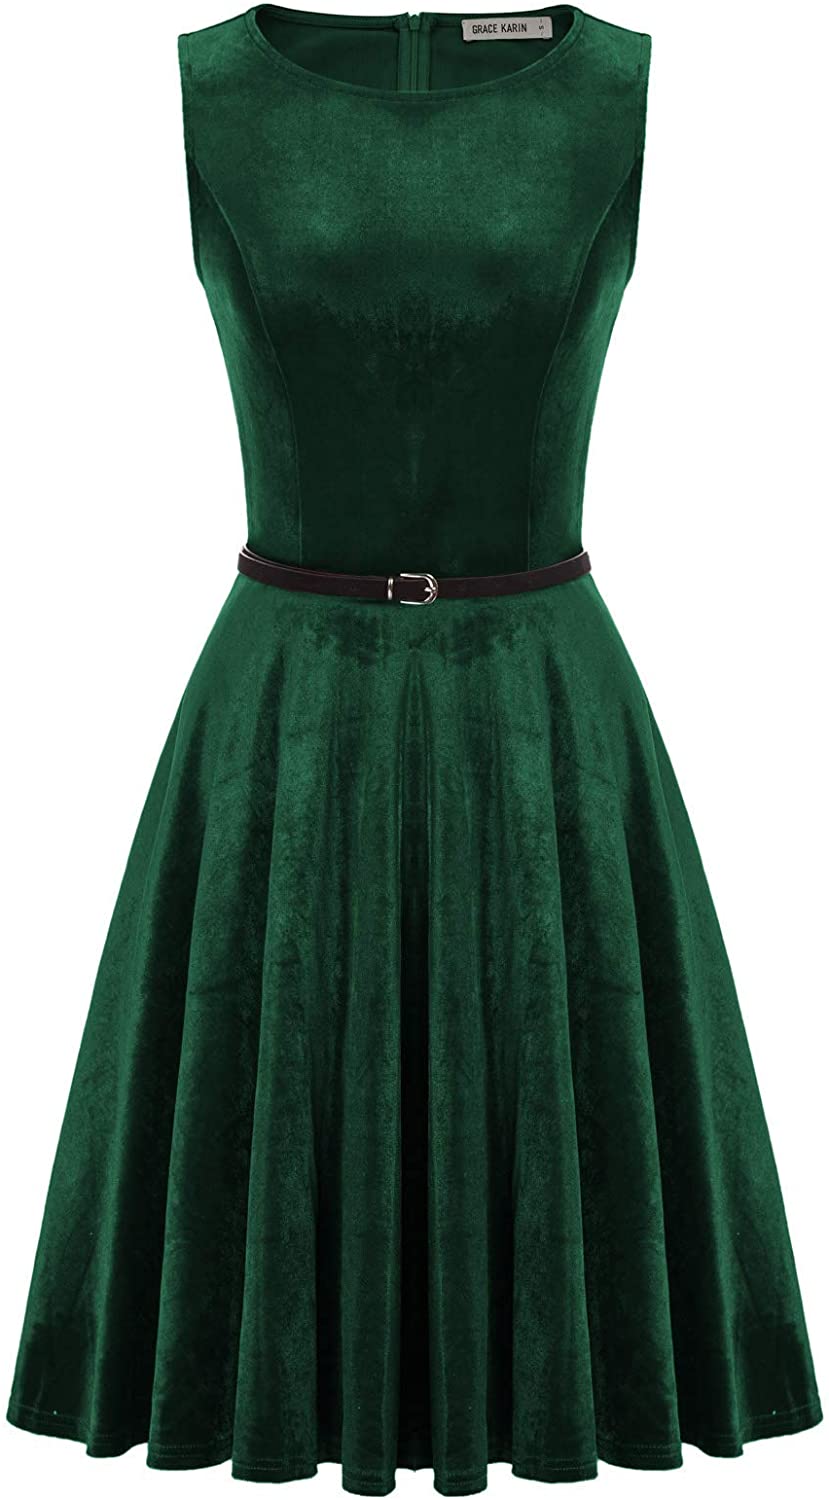 GRACE KARIN Boatneck Sleeveless Vintage Tea Dress with Belt price